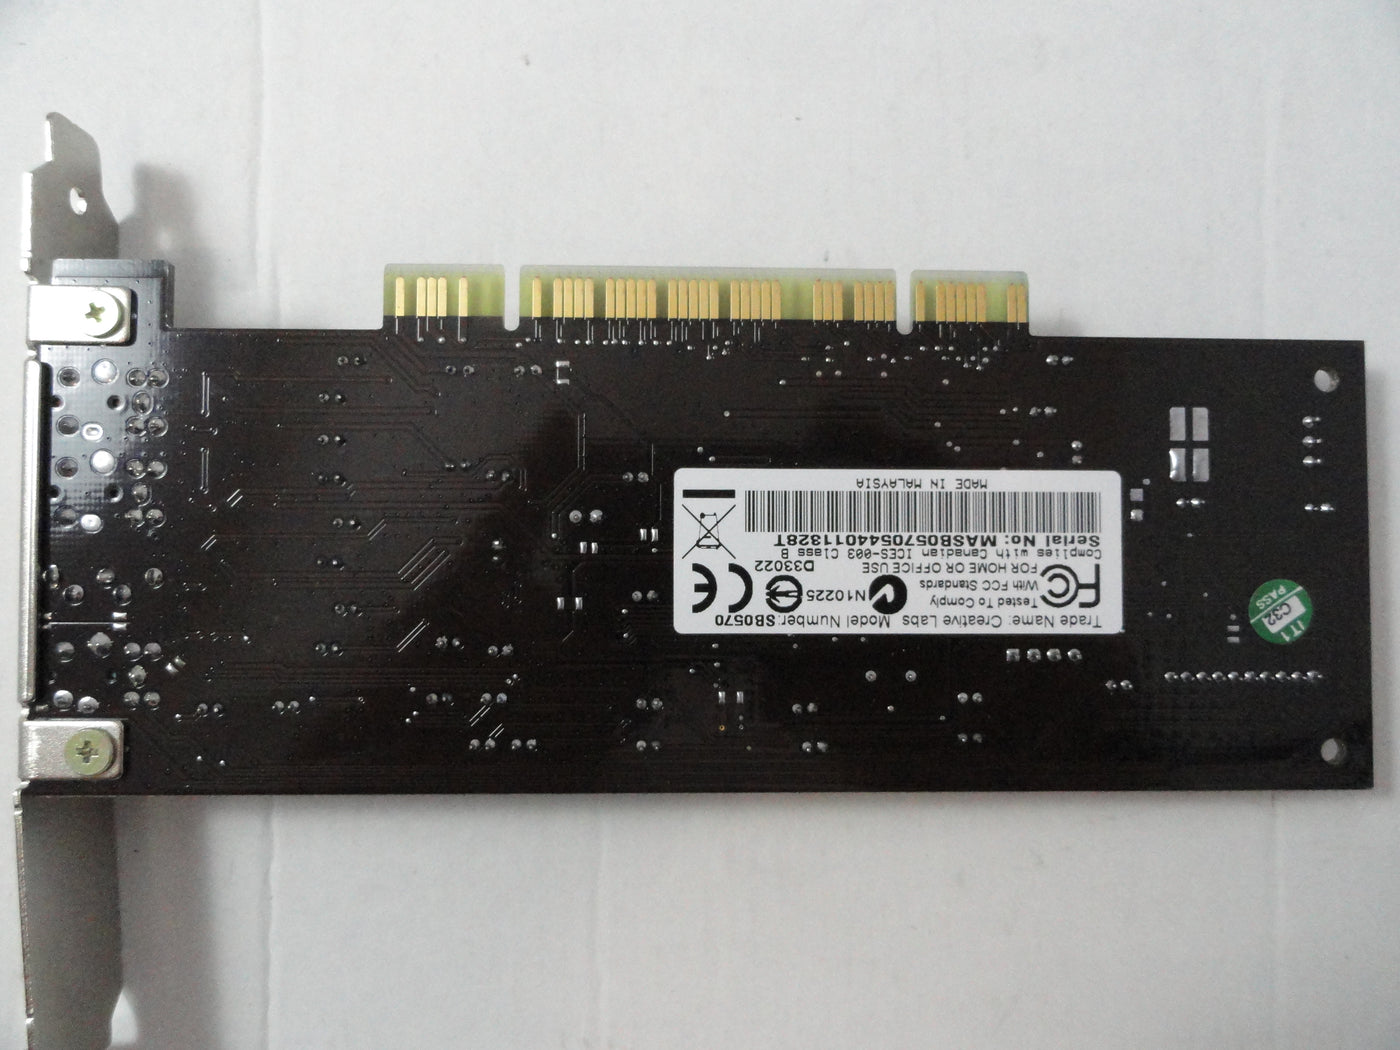 MC1821_SB0570_Creative Labs Audigy SE 7.1 24 bit Sound Card - Image6